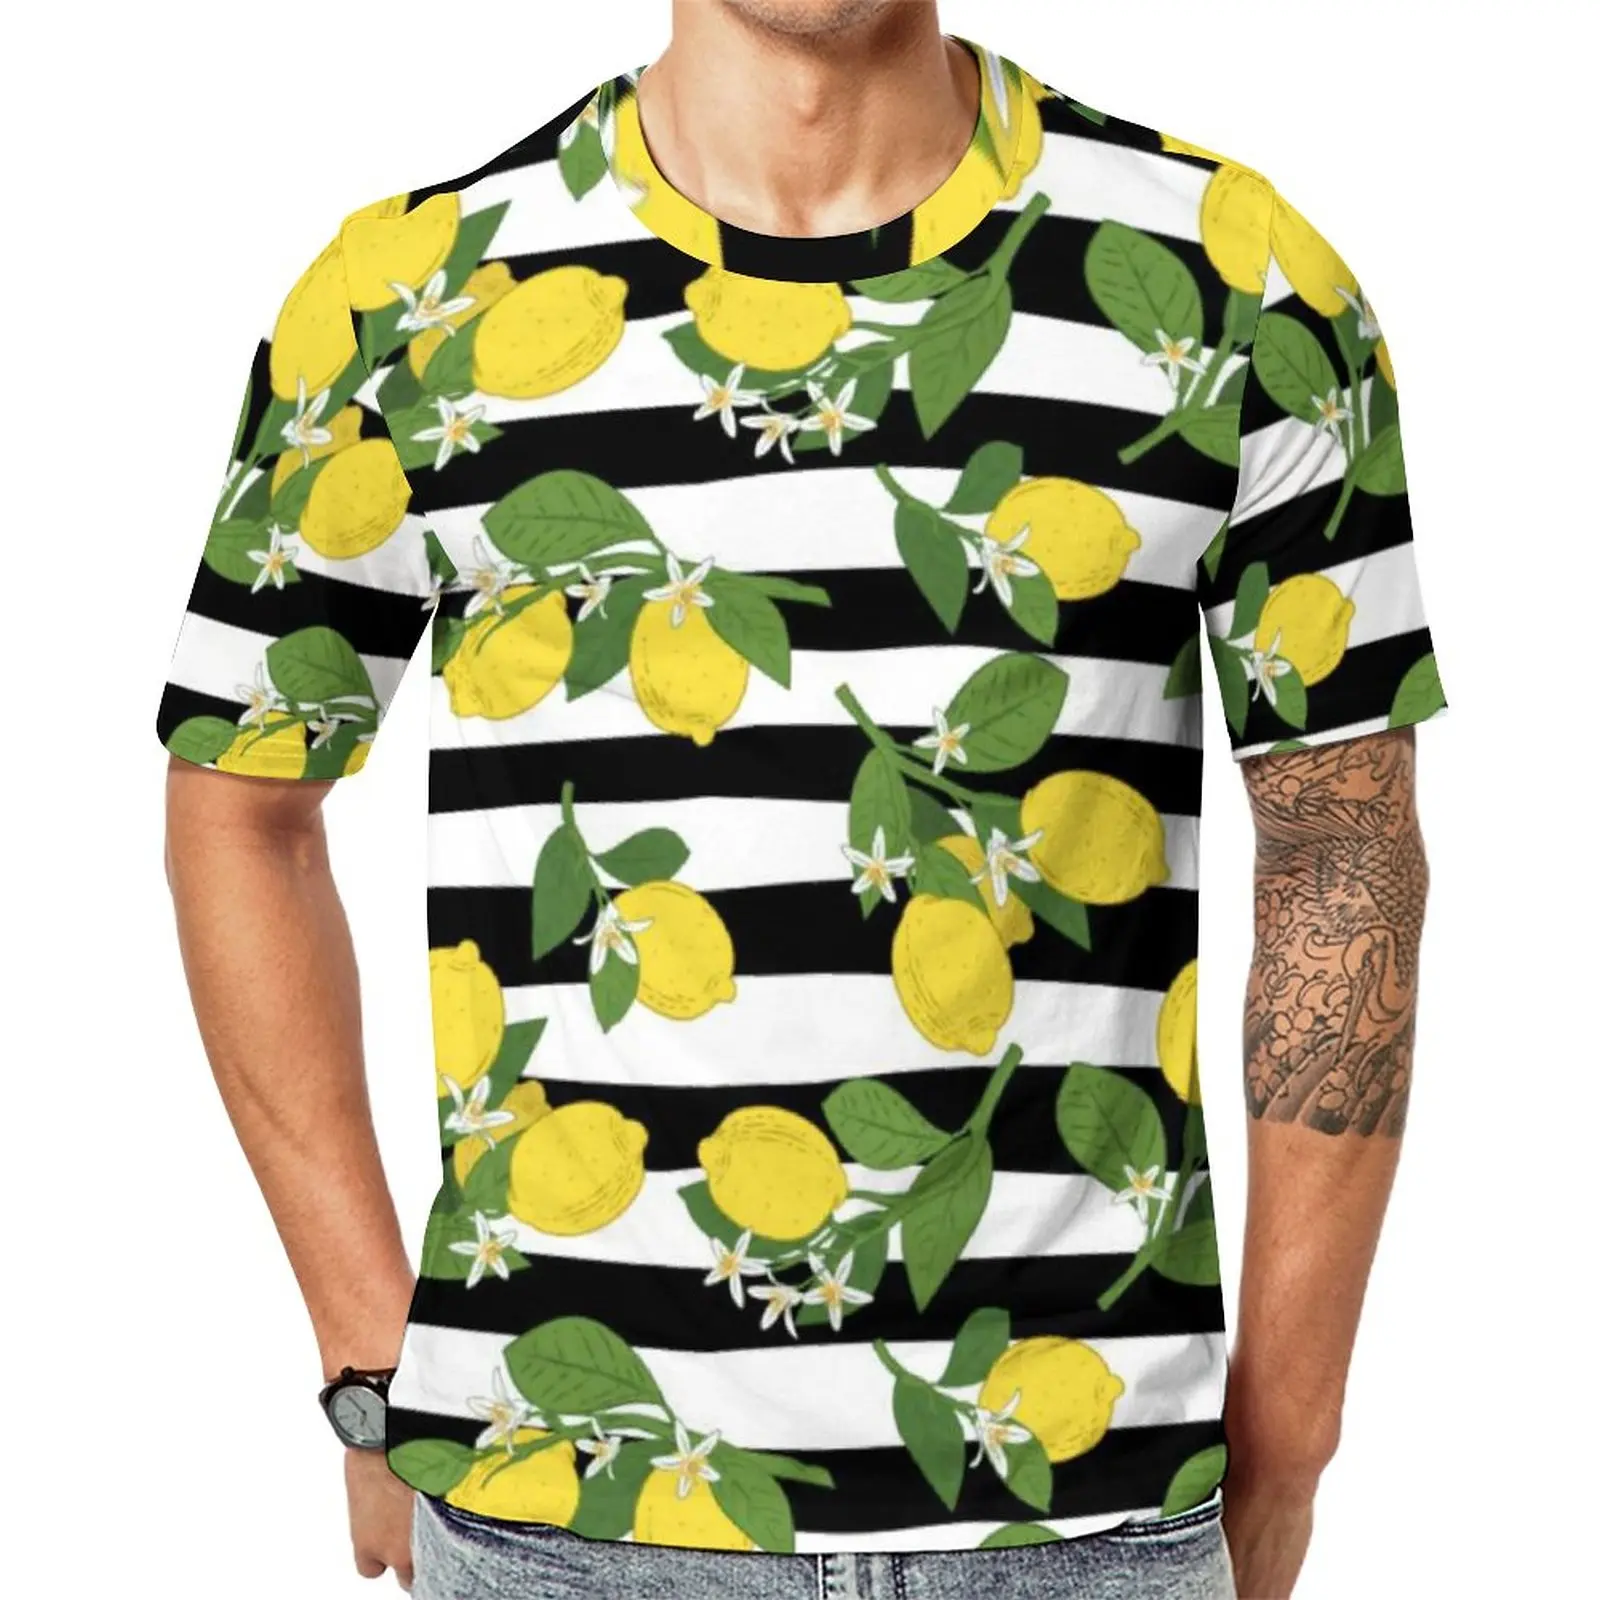 

Lemon Lemons Yellow T Shirt Black White Stripes Retro T Shirts Short Sleeve Graphic Tops Cheap Summer Funny Oversize Top Tees